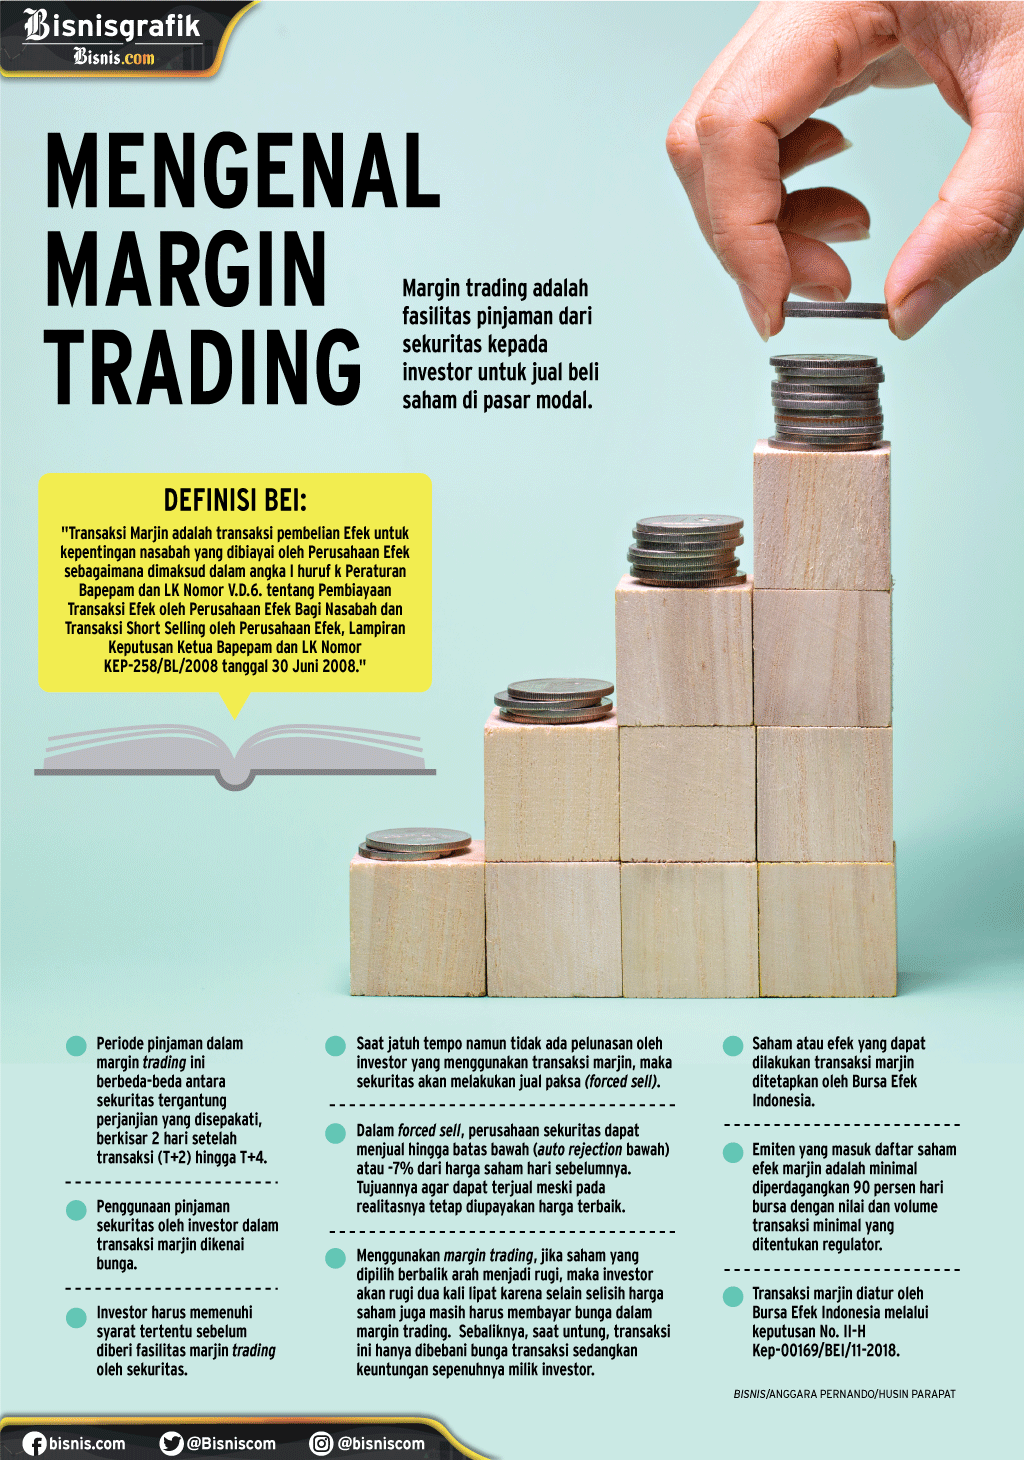  Mengenal Margin Trading Saham